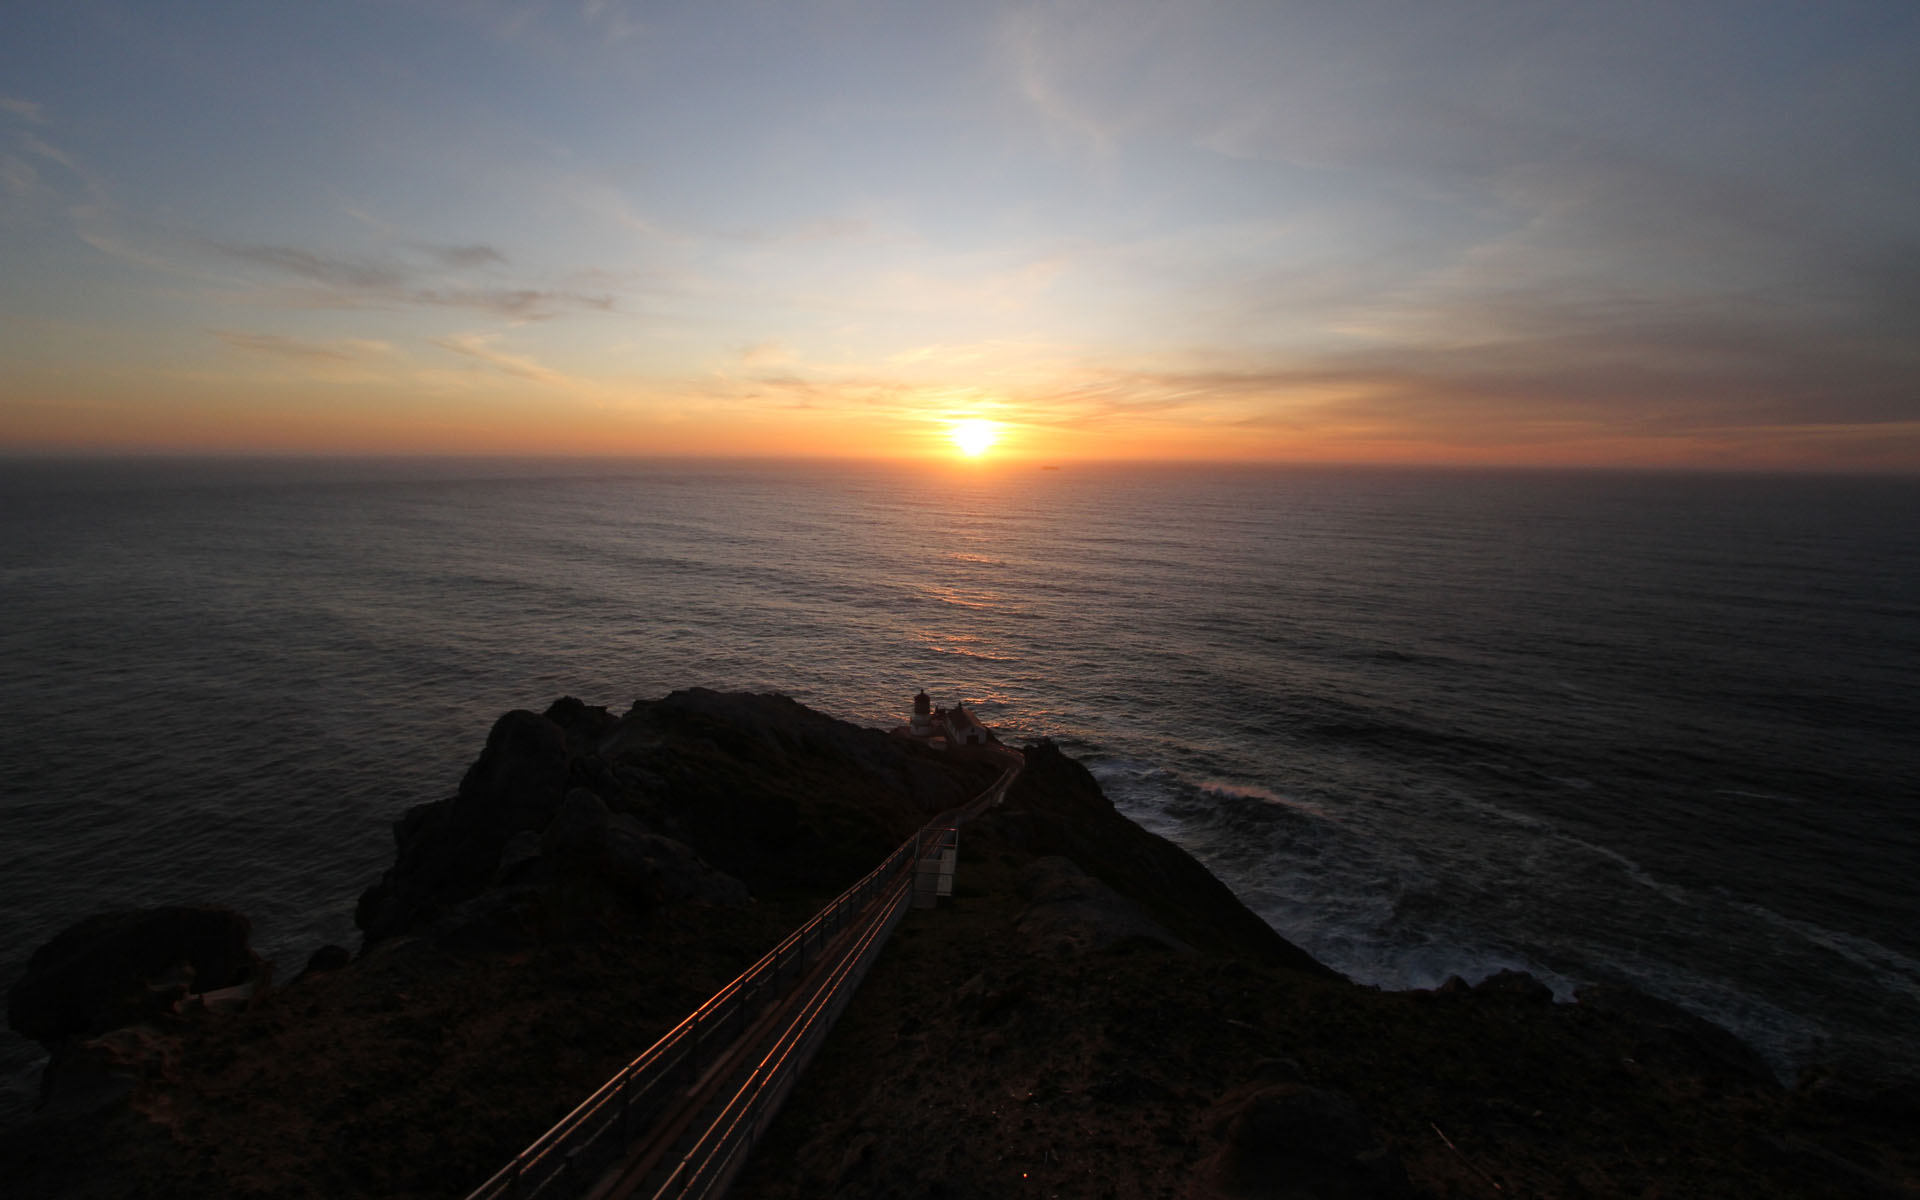 Point Reyes Sunset